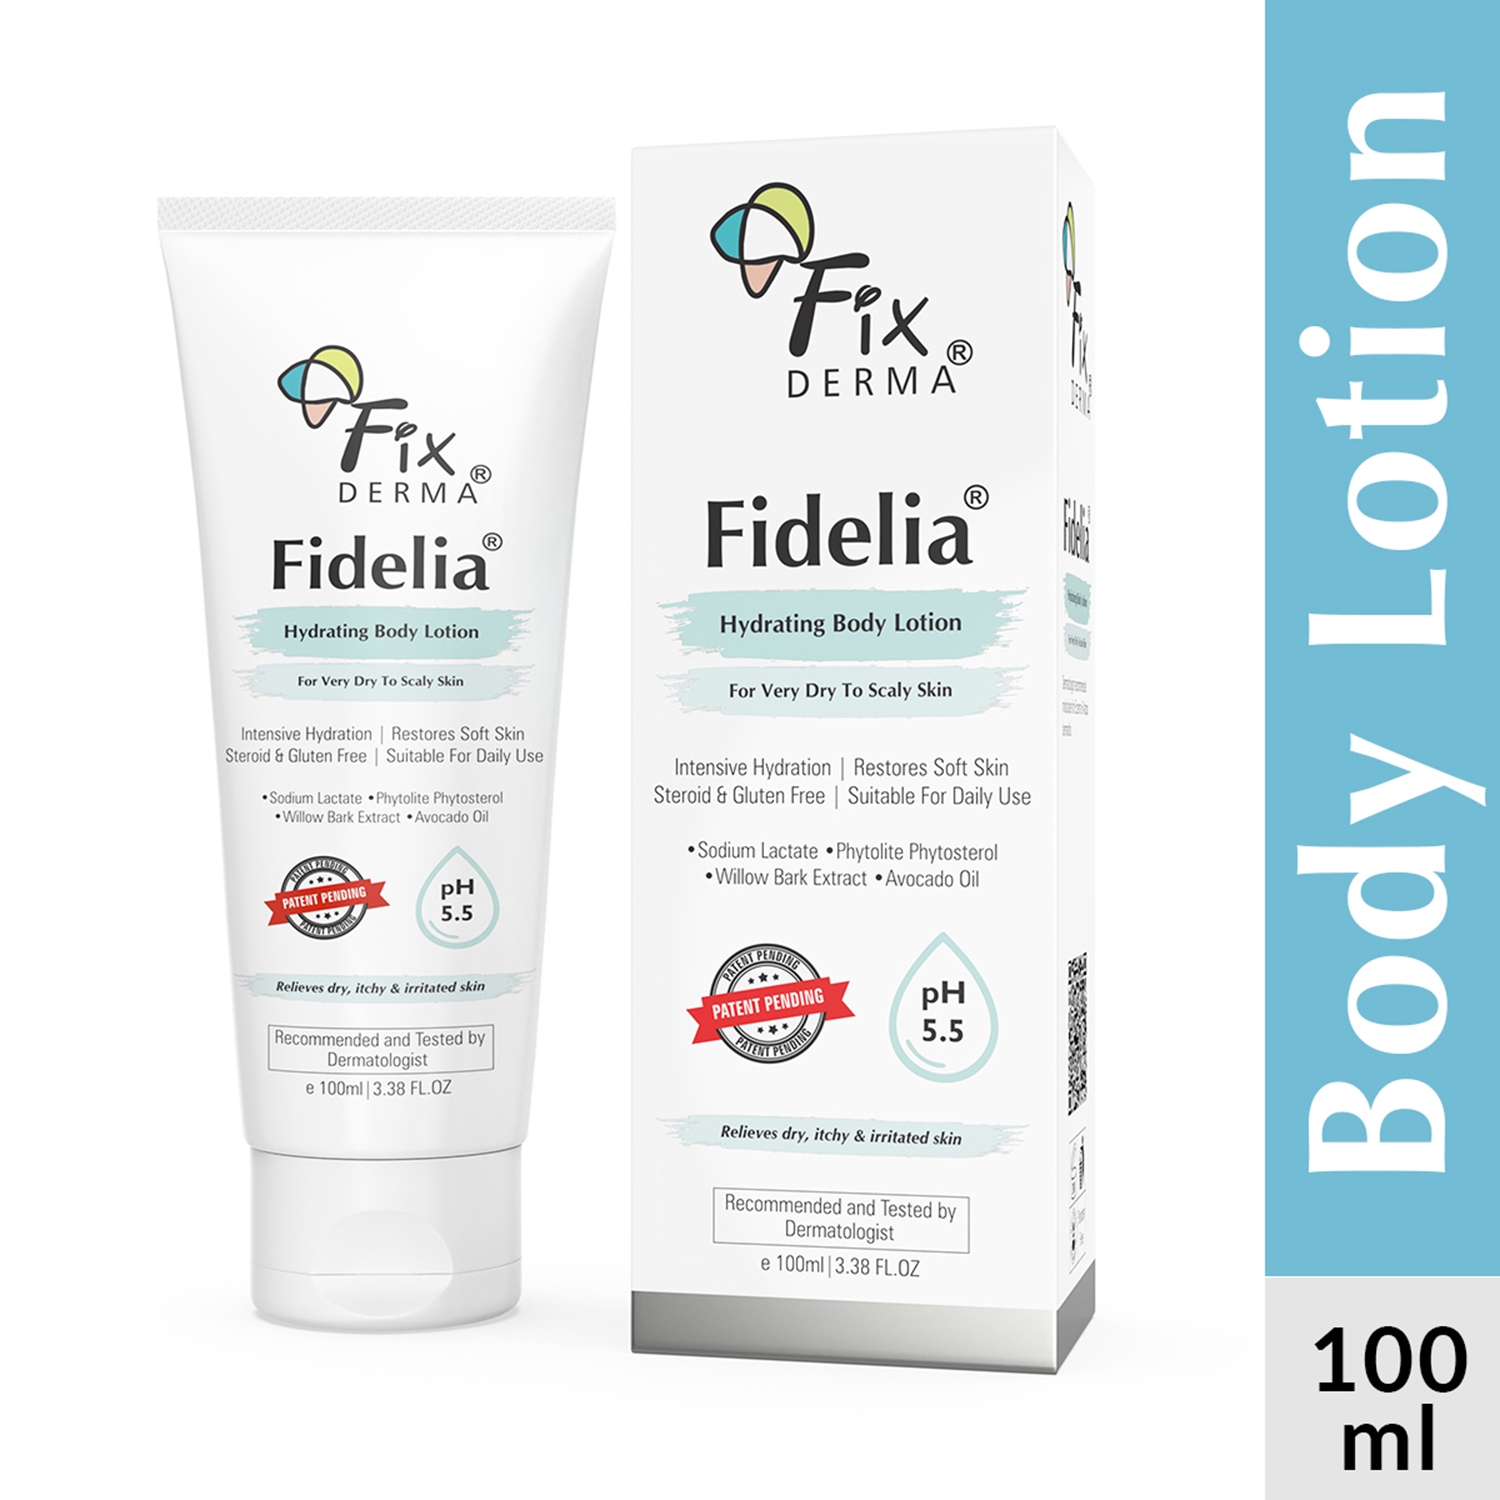 Fixderma Fidelia Hydrating Body Lotion for Very Dry To Scaly Skin with Avocado Oil (100ml)